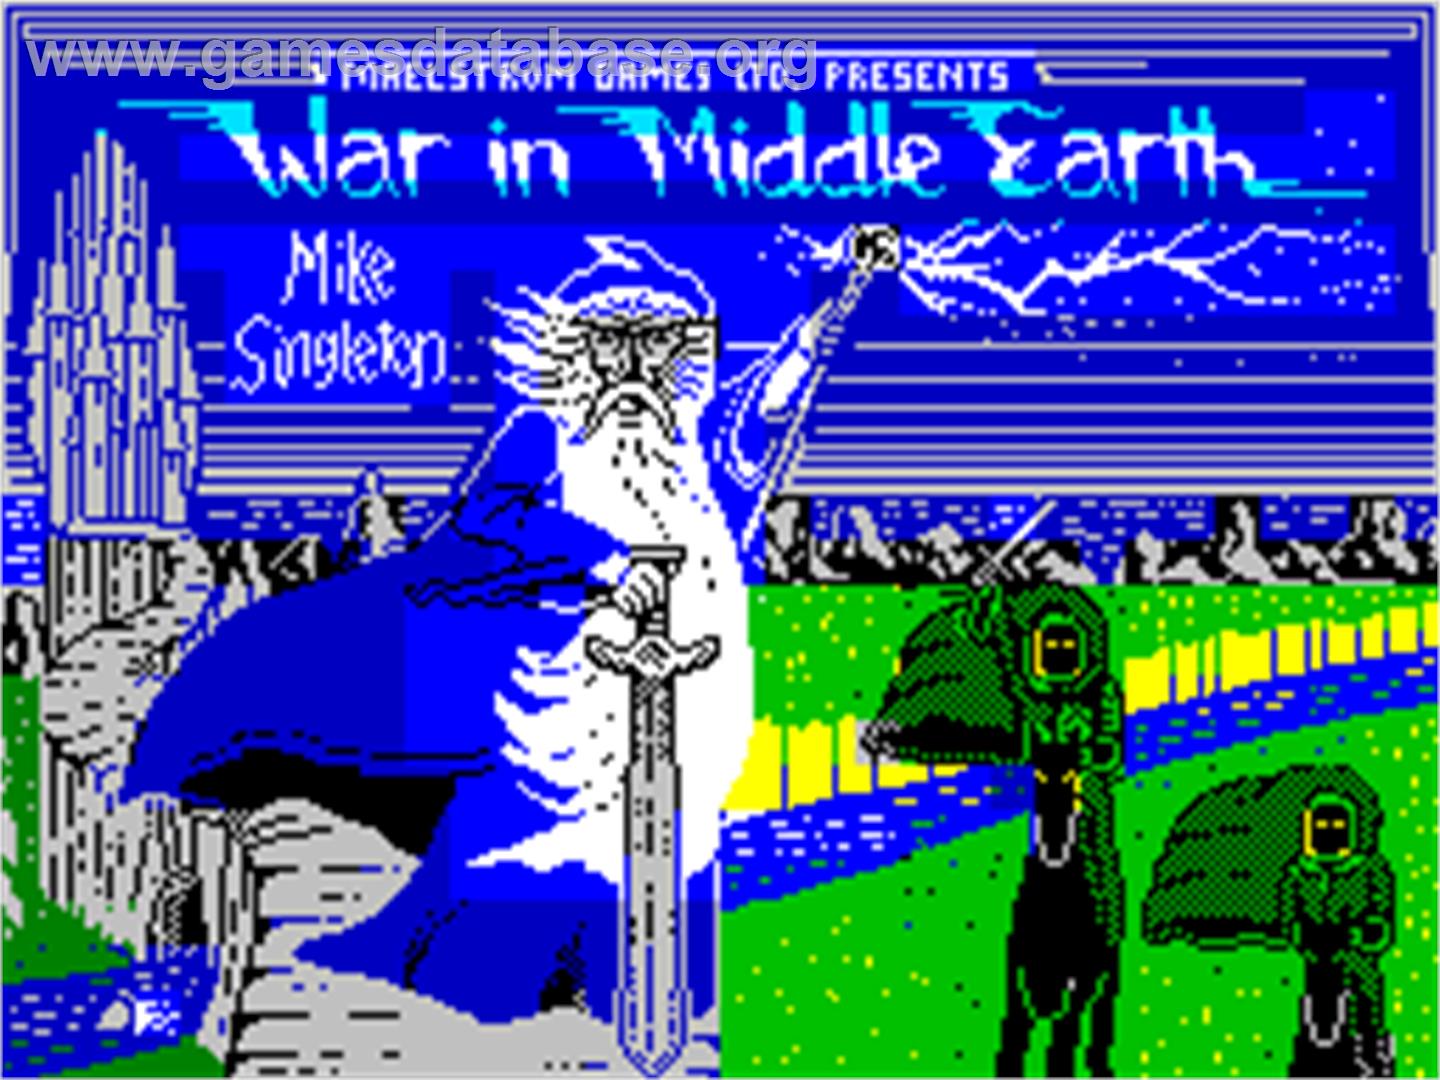 J.R.R. Tolkien's War in Middle Earth - Sinclair ZX Spectrum - Artwork - Title Screen